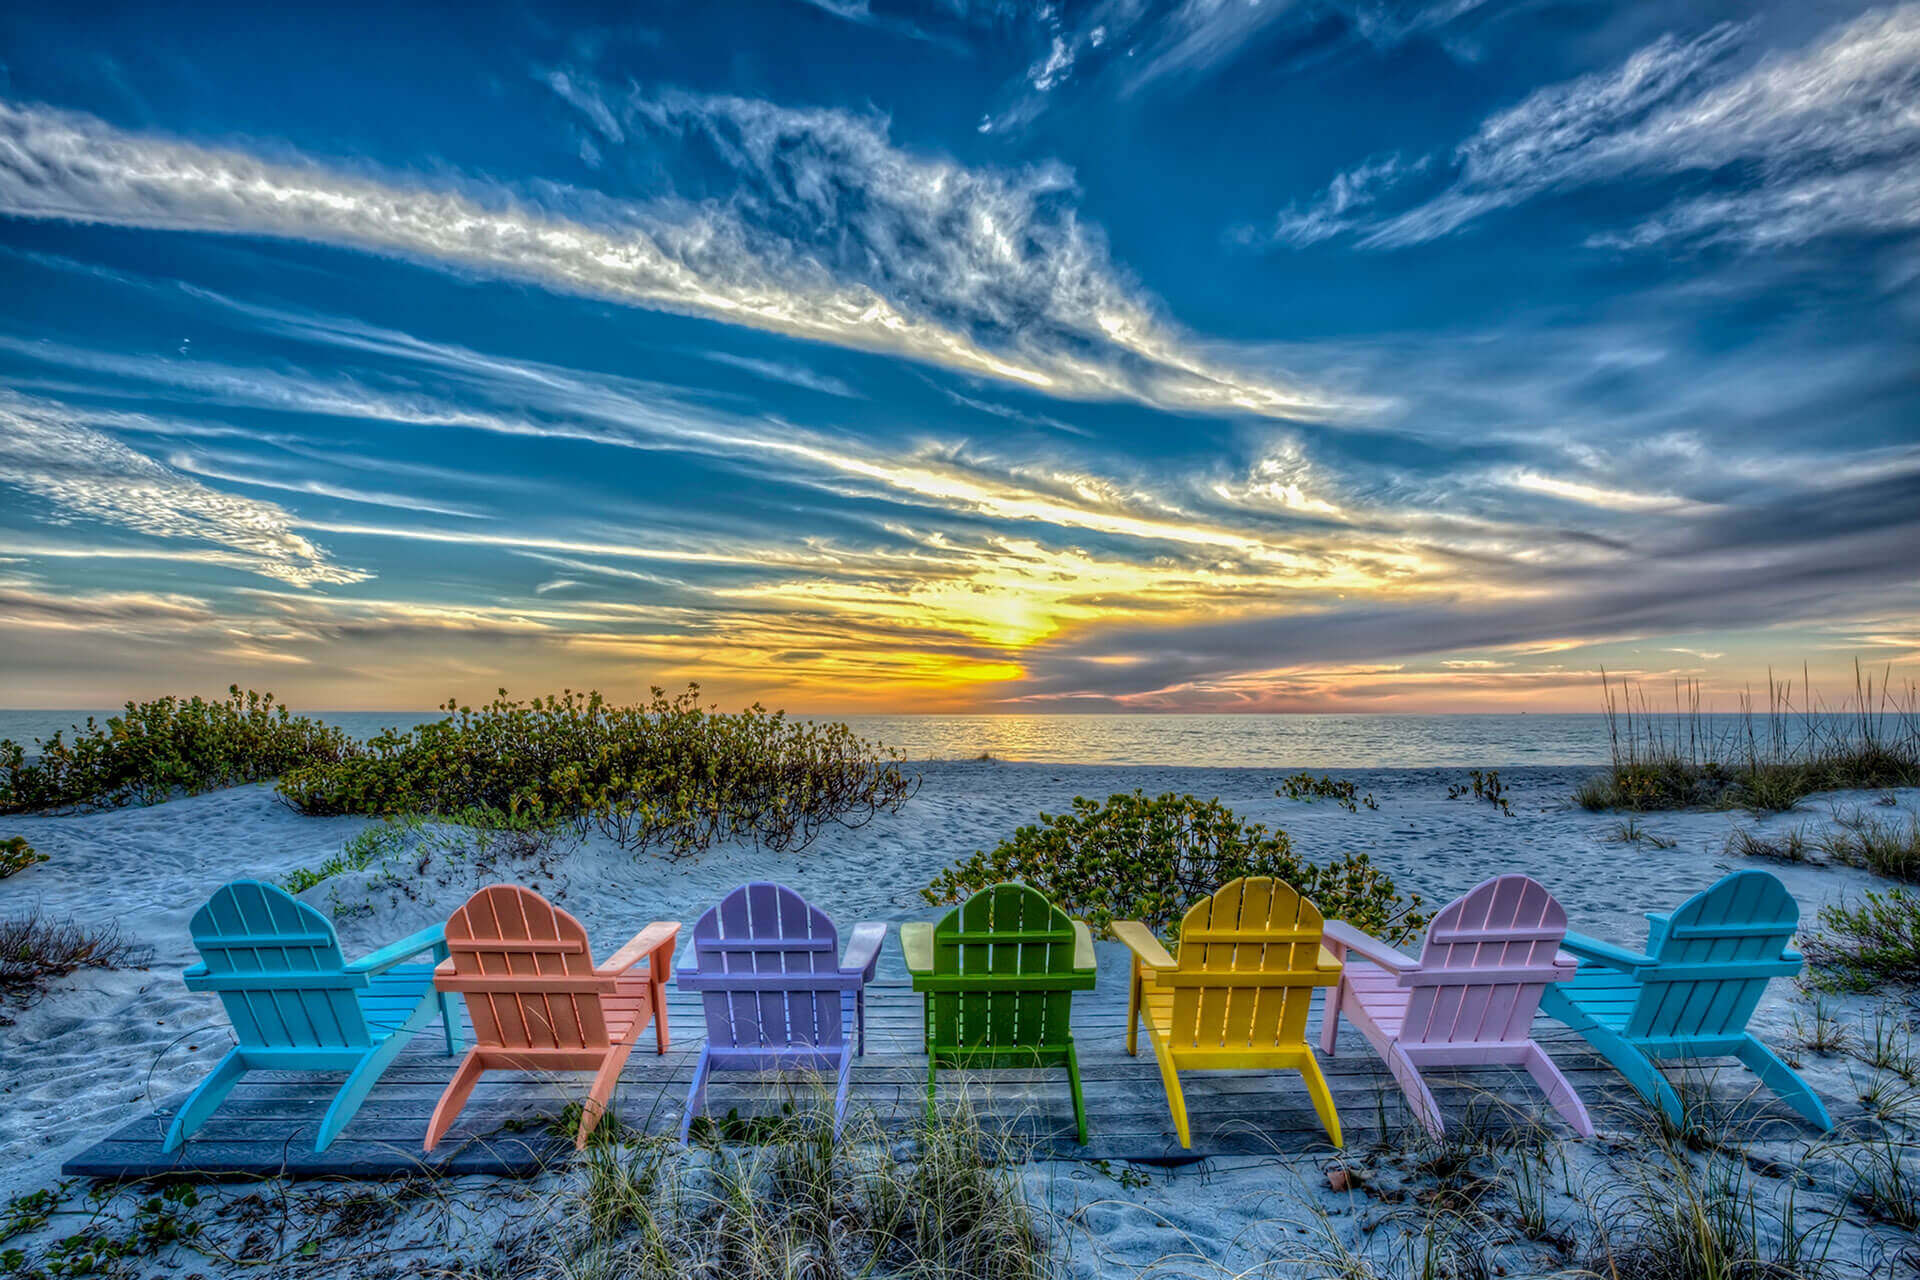 Six chairs on the beach